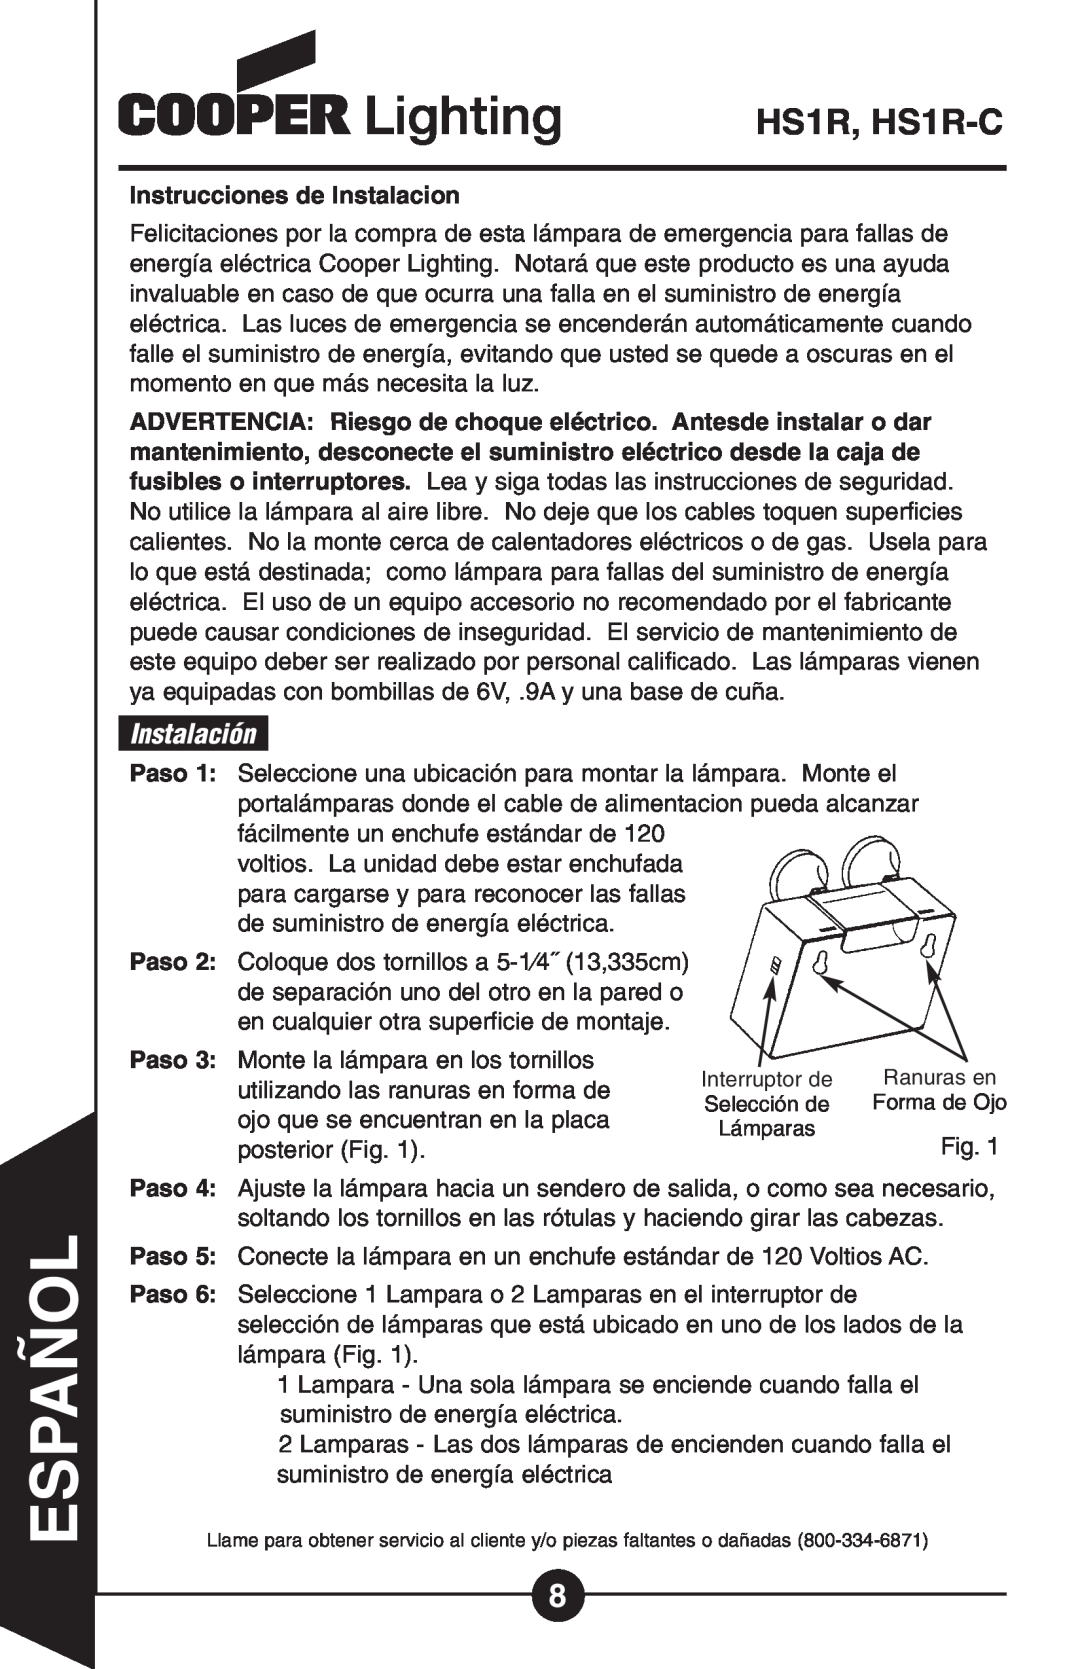 Cooper Lighting Hs 1r instruction manual Instalación, Español, HS1R, HS1R-C 